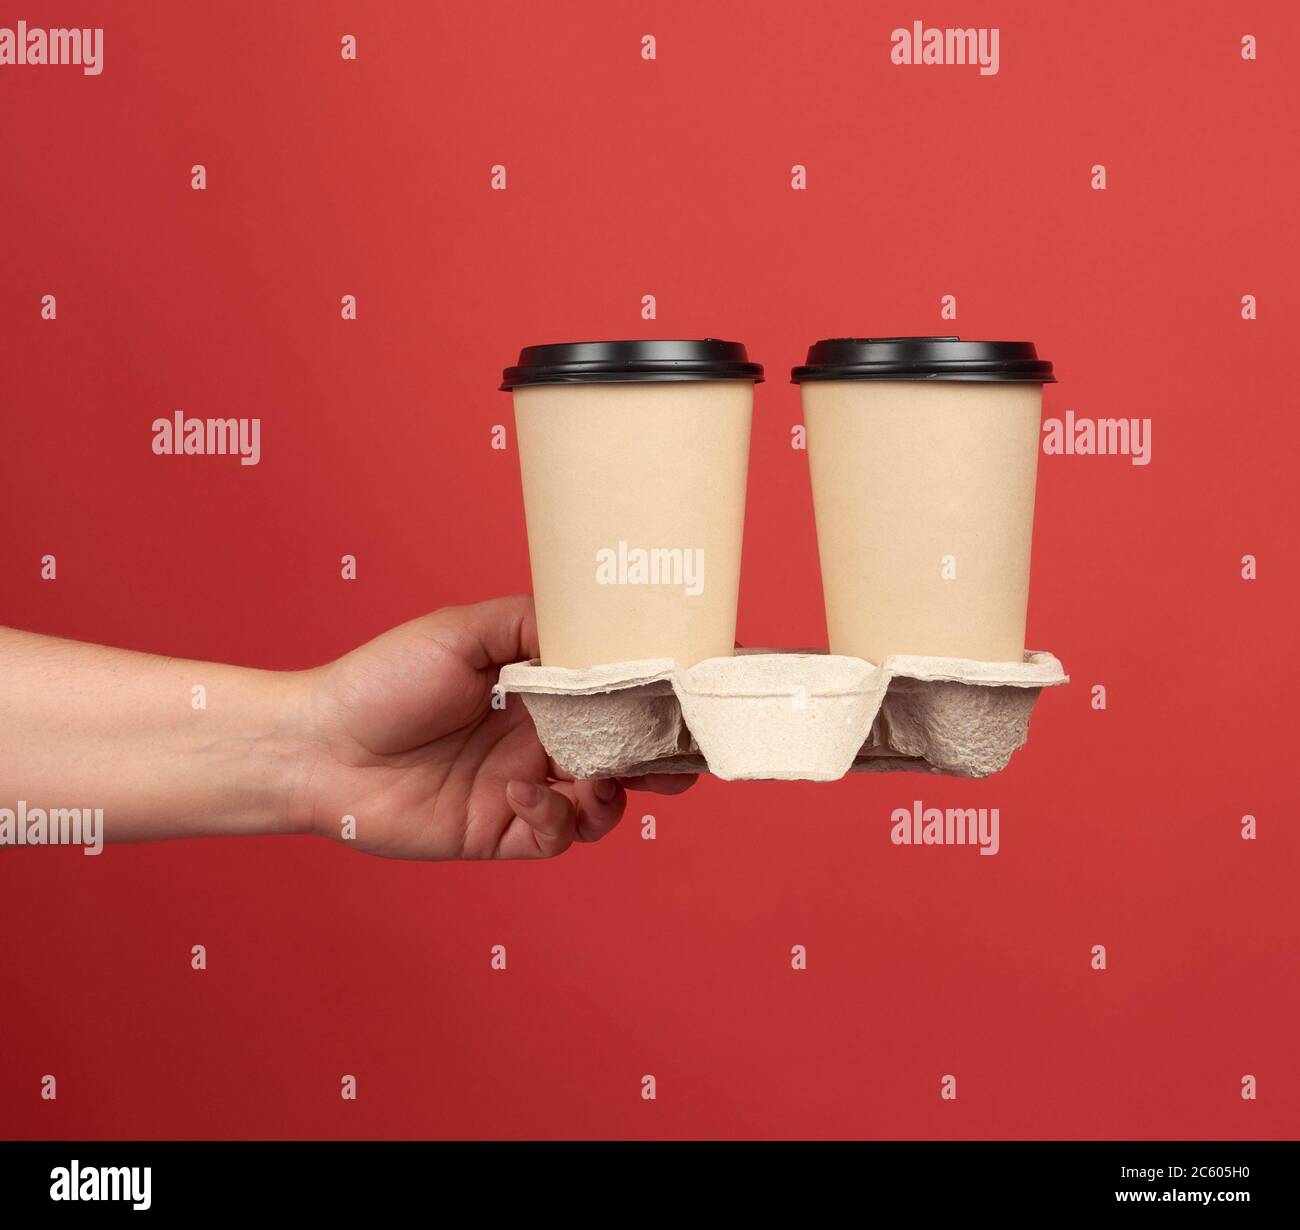 21 Fotos de Tazas de Café para Inspirarte en Fotografía